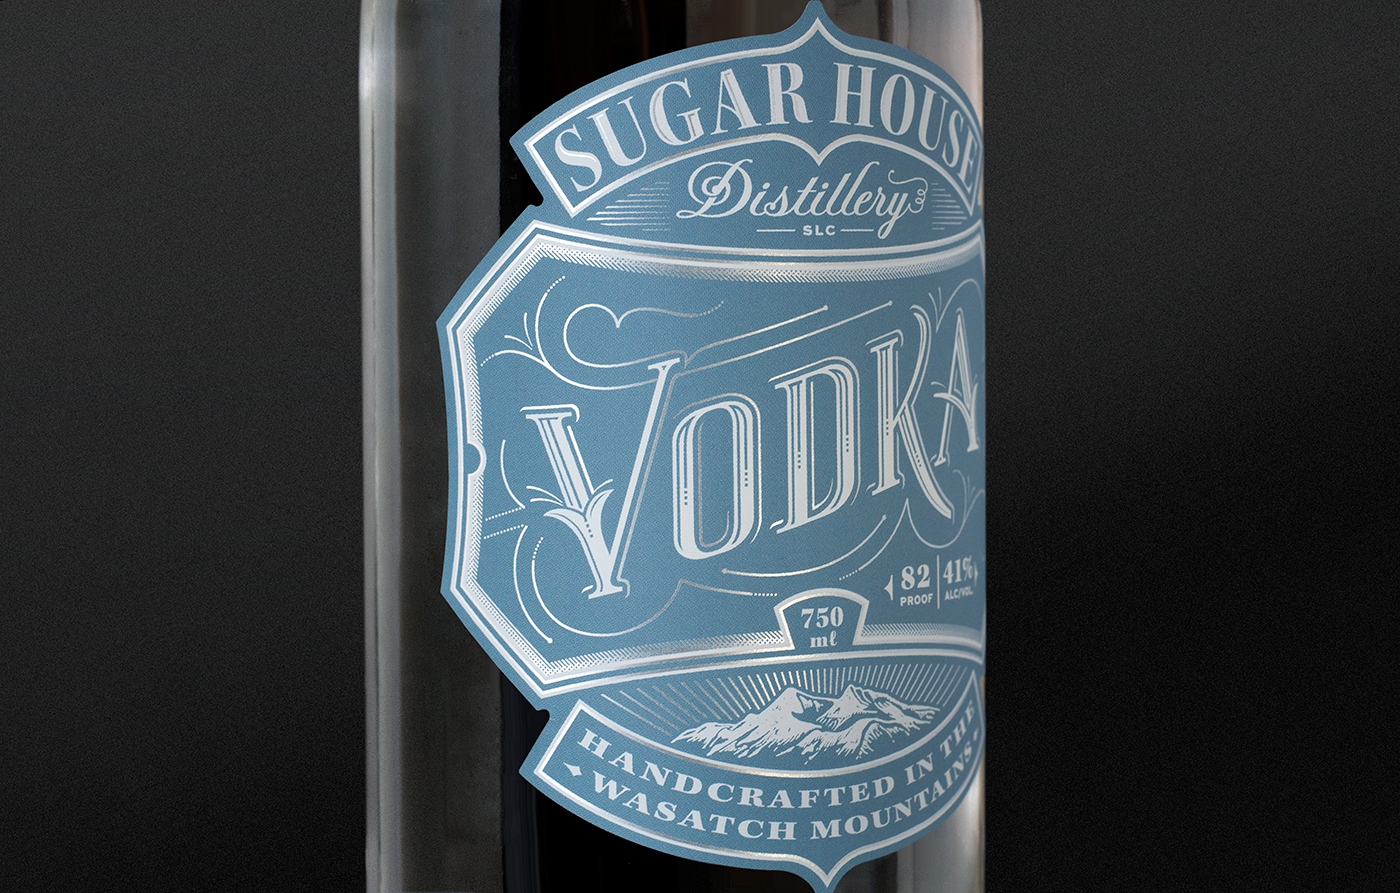 Vodka Spirits alcohol bottle Label distillery Salt Lake City utah monogram